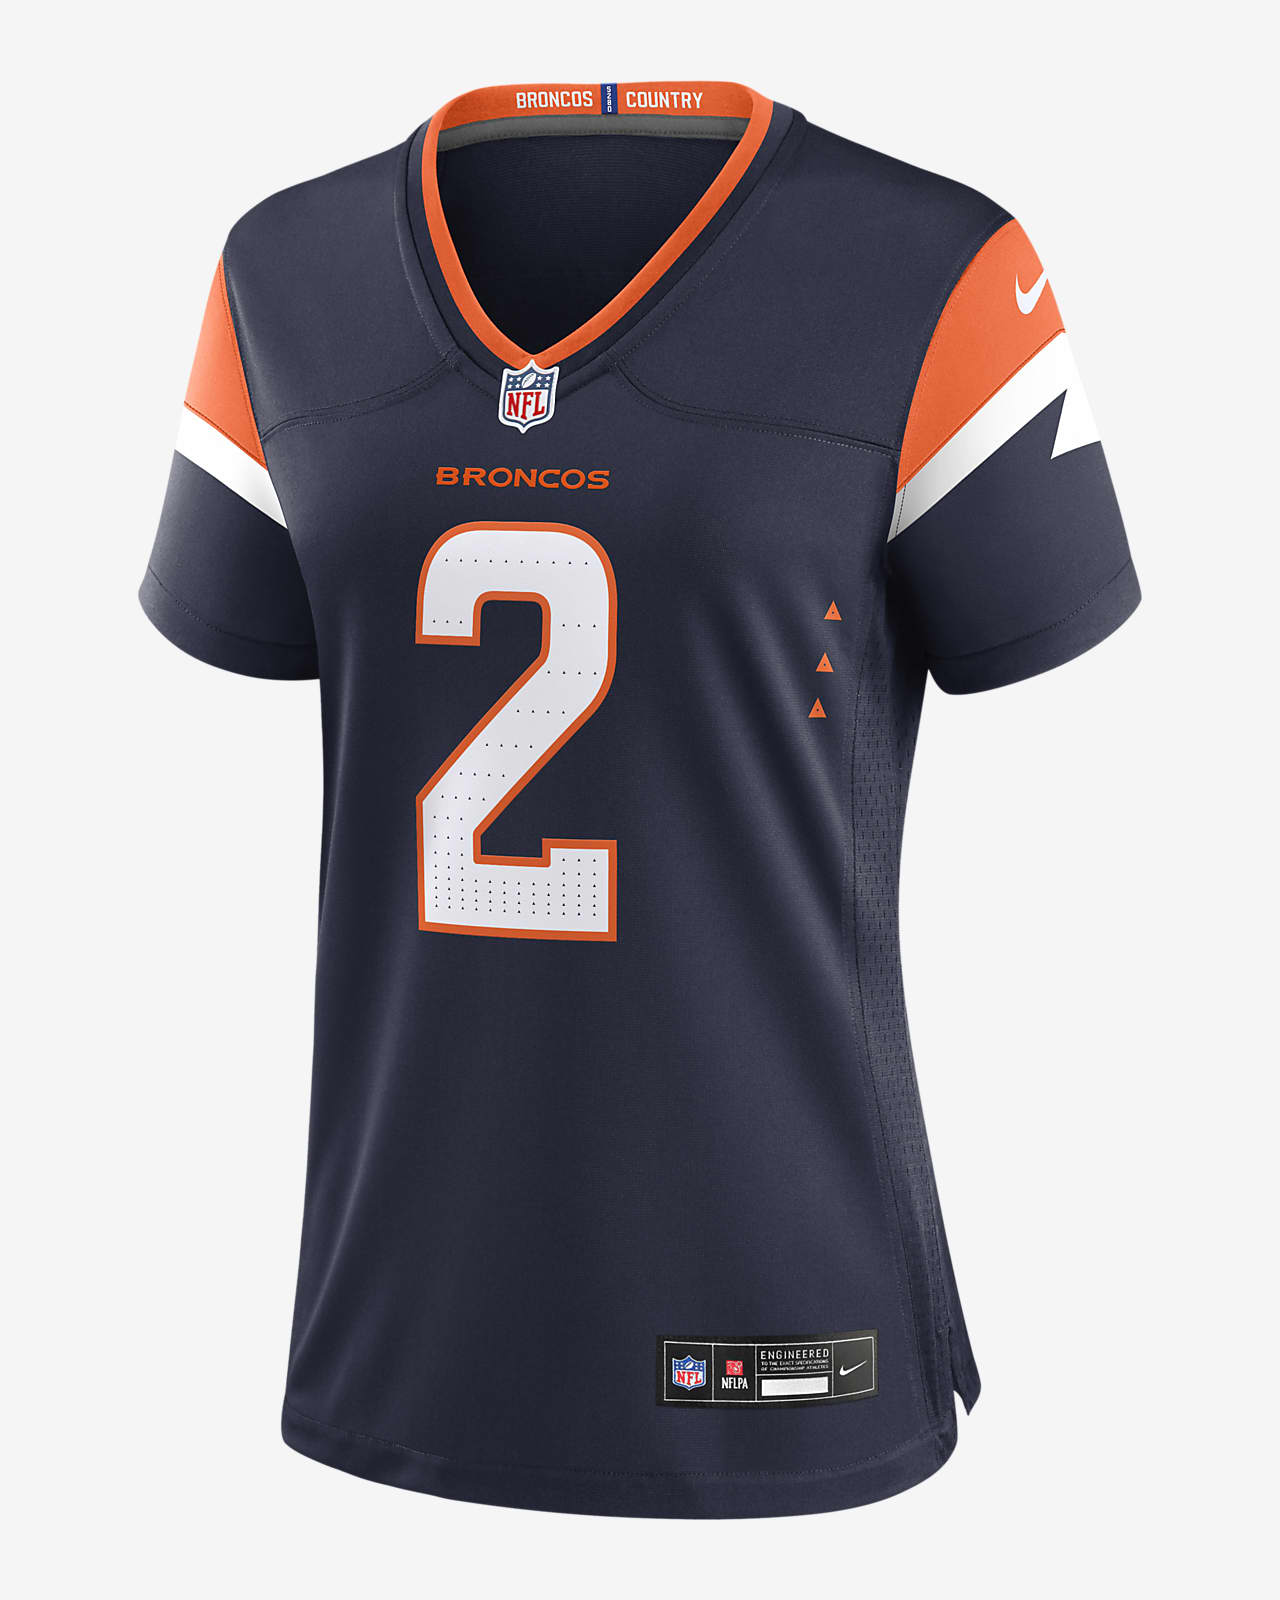 Patrick Surtain II Denver Broncos Women's Nike NFL Game Football Jersey